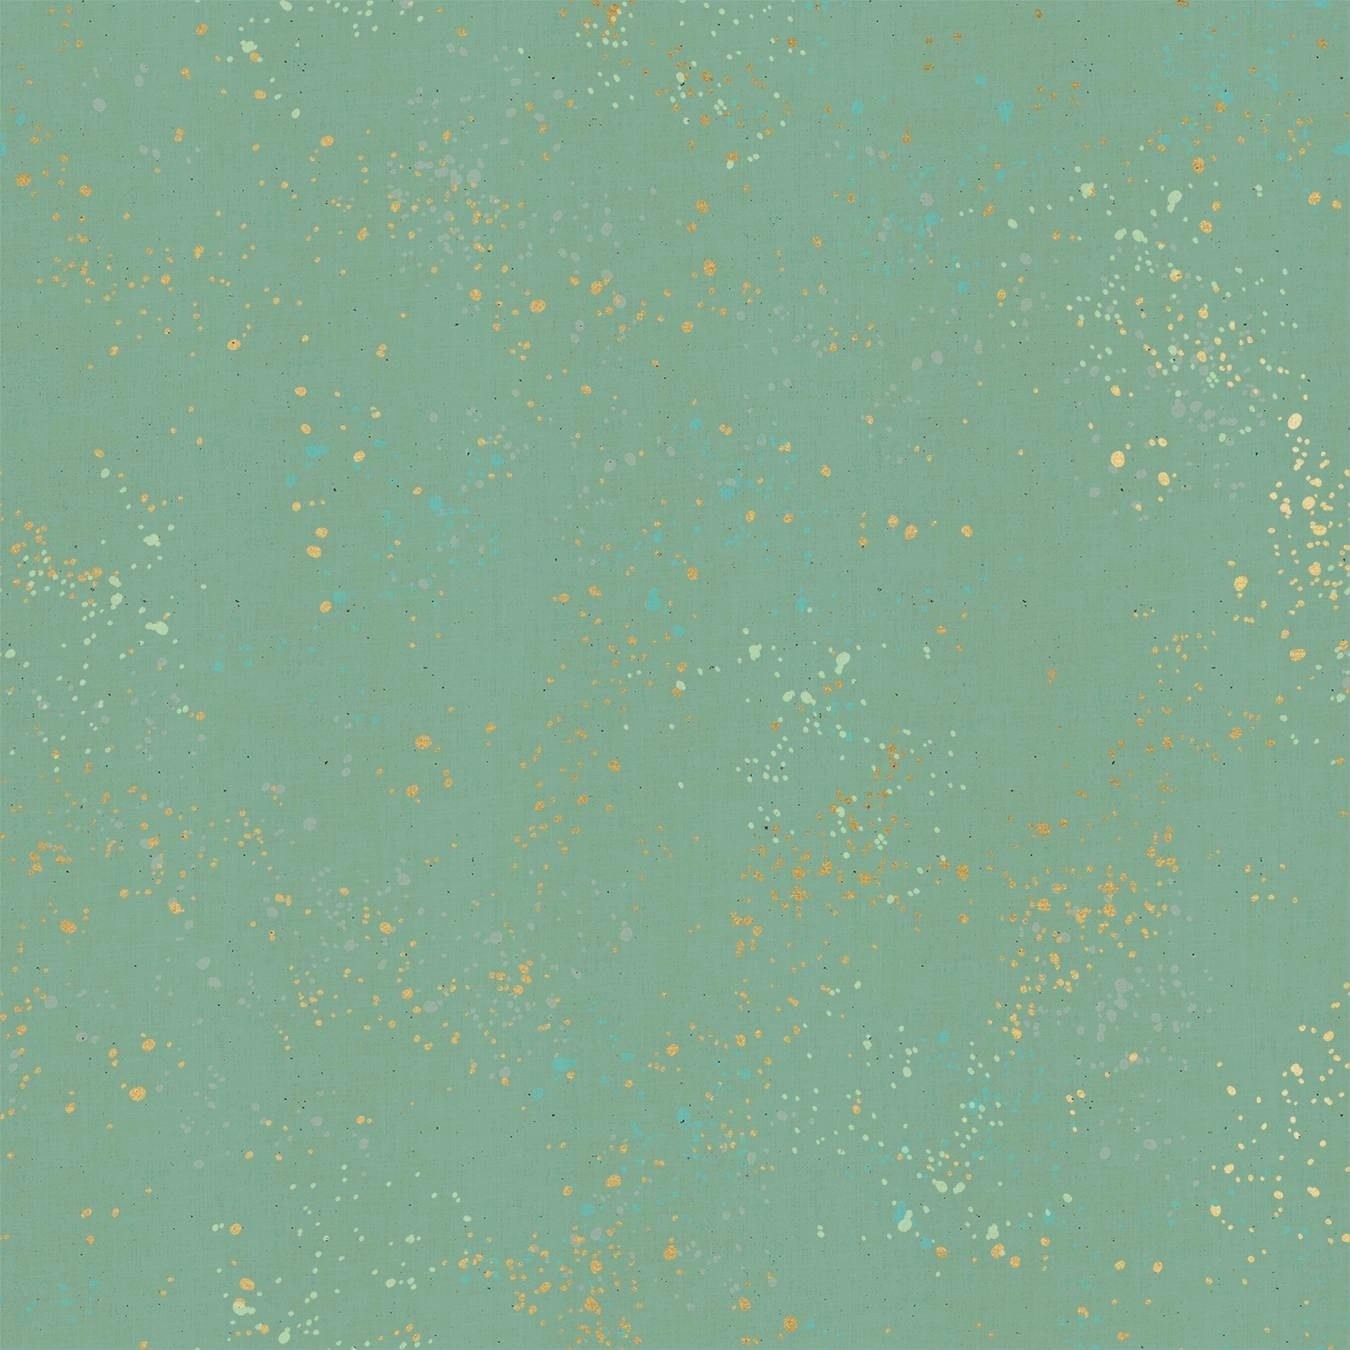 Speckled - Ruby Star Society - soft aqua metallic